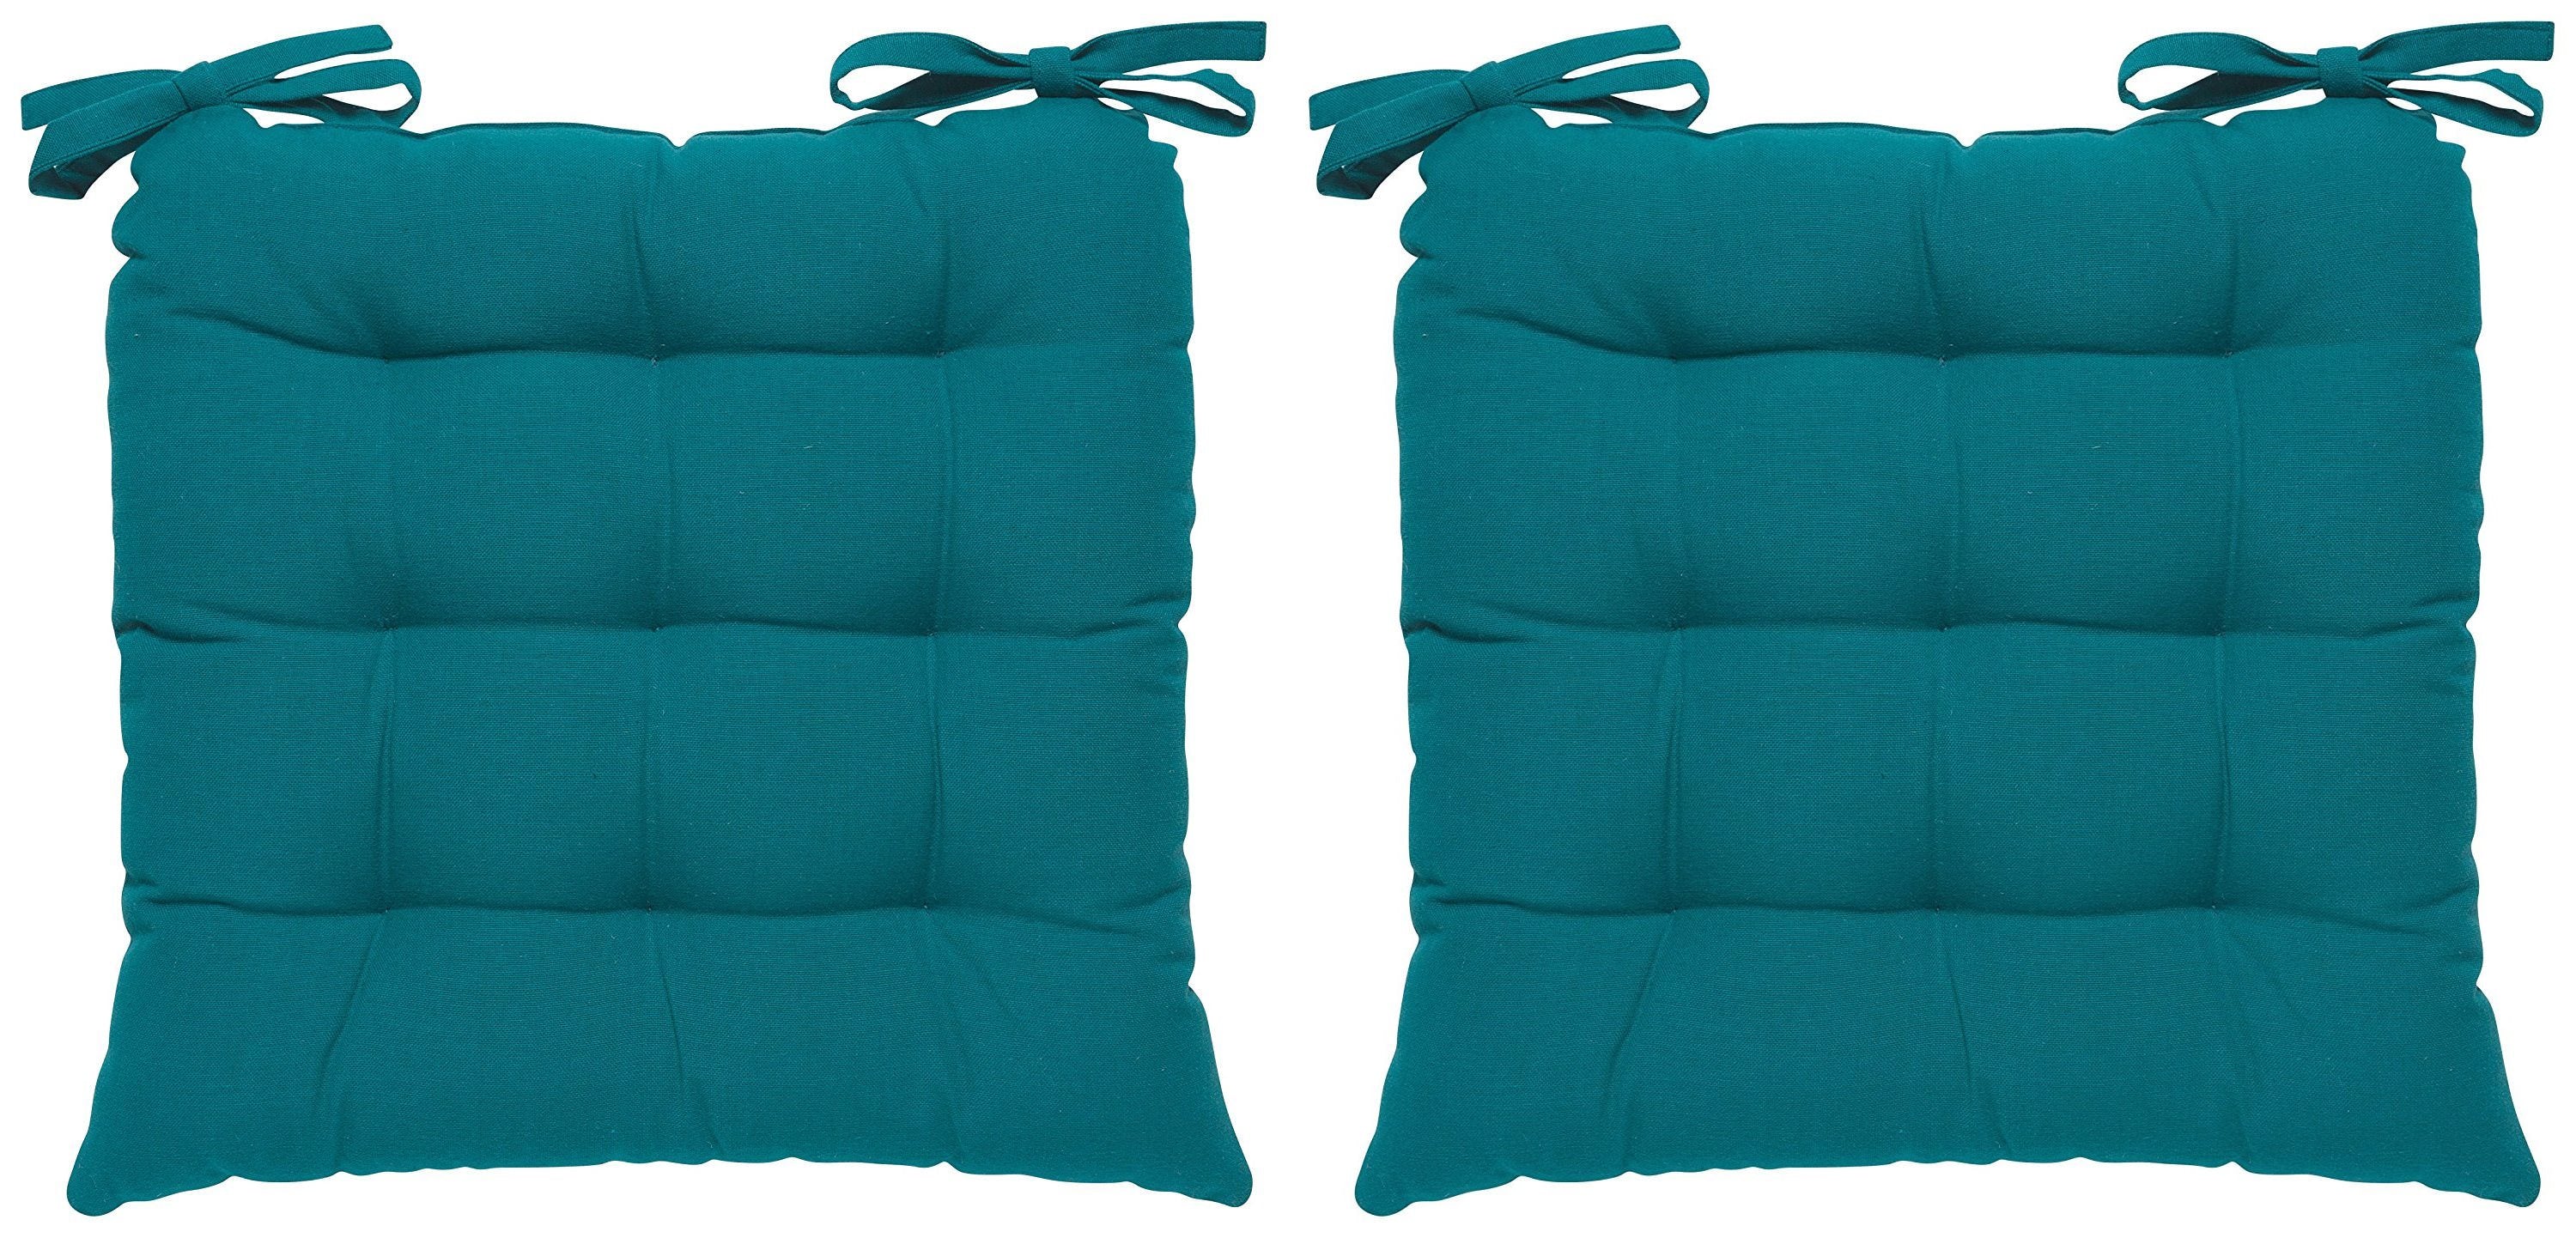 Encasa Homes Chairpad 40x40cm (2pc pack) - Dyed Cotton Canvas Filled Cushion - Azul Blue